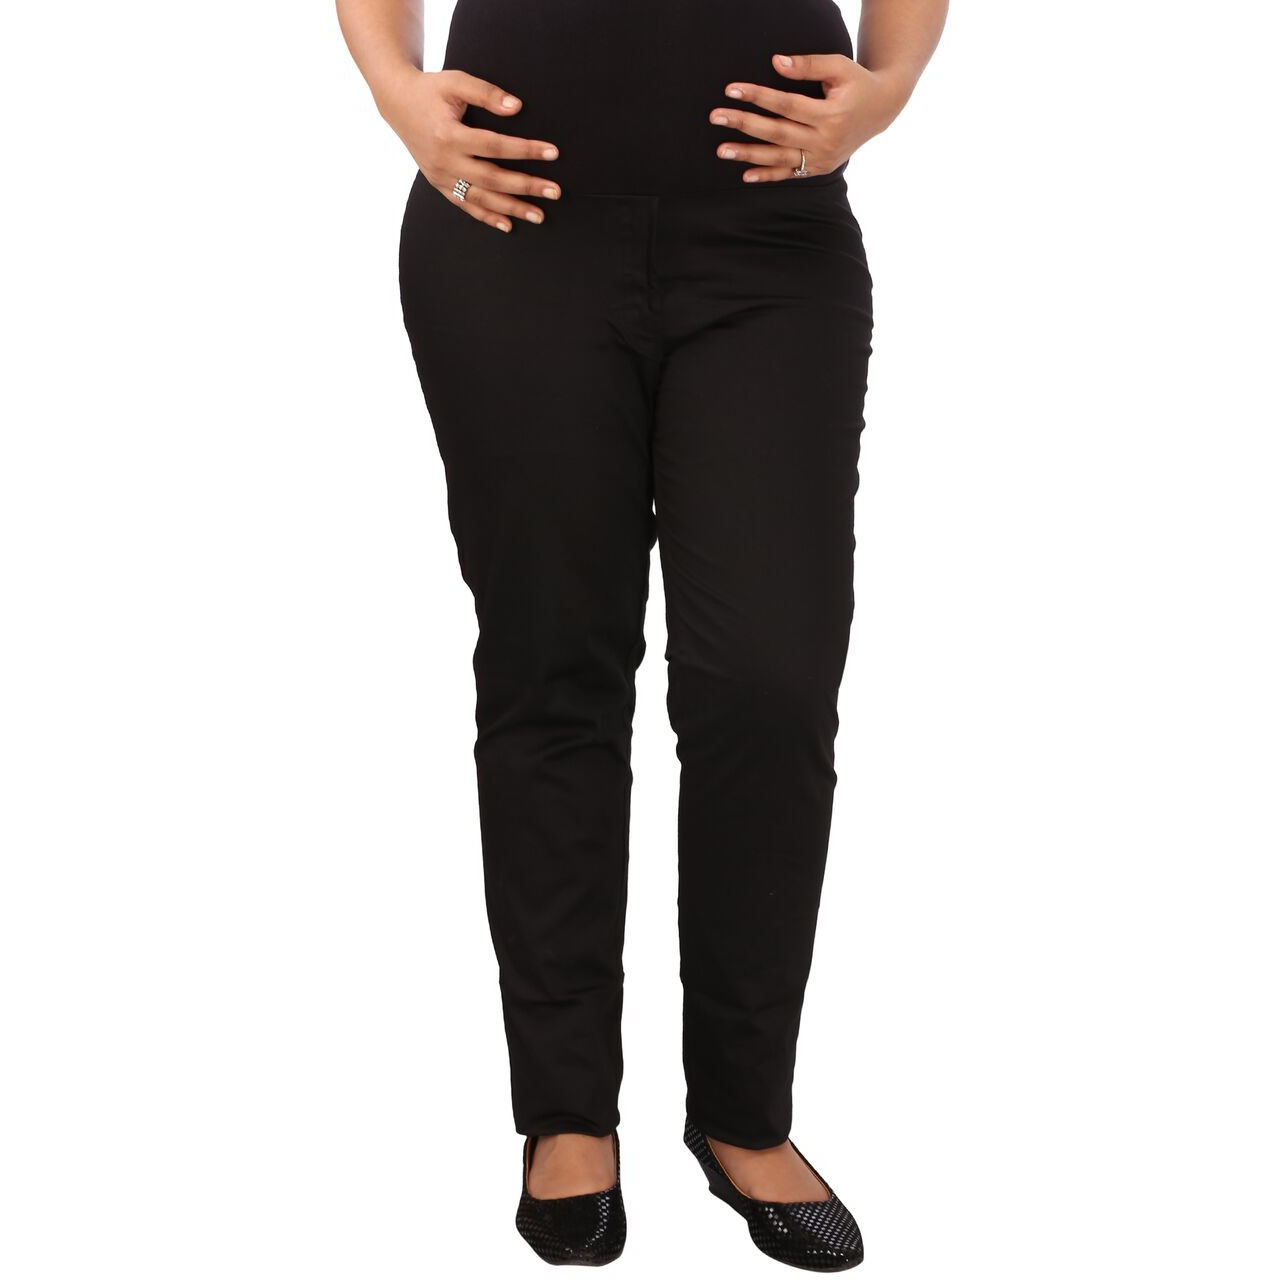 Mamma's maternity Women's Black Cotton Trouser (Size:LARGE)